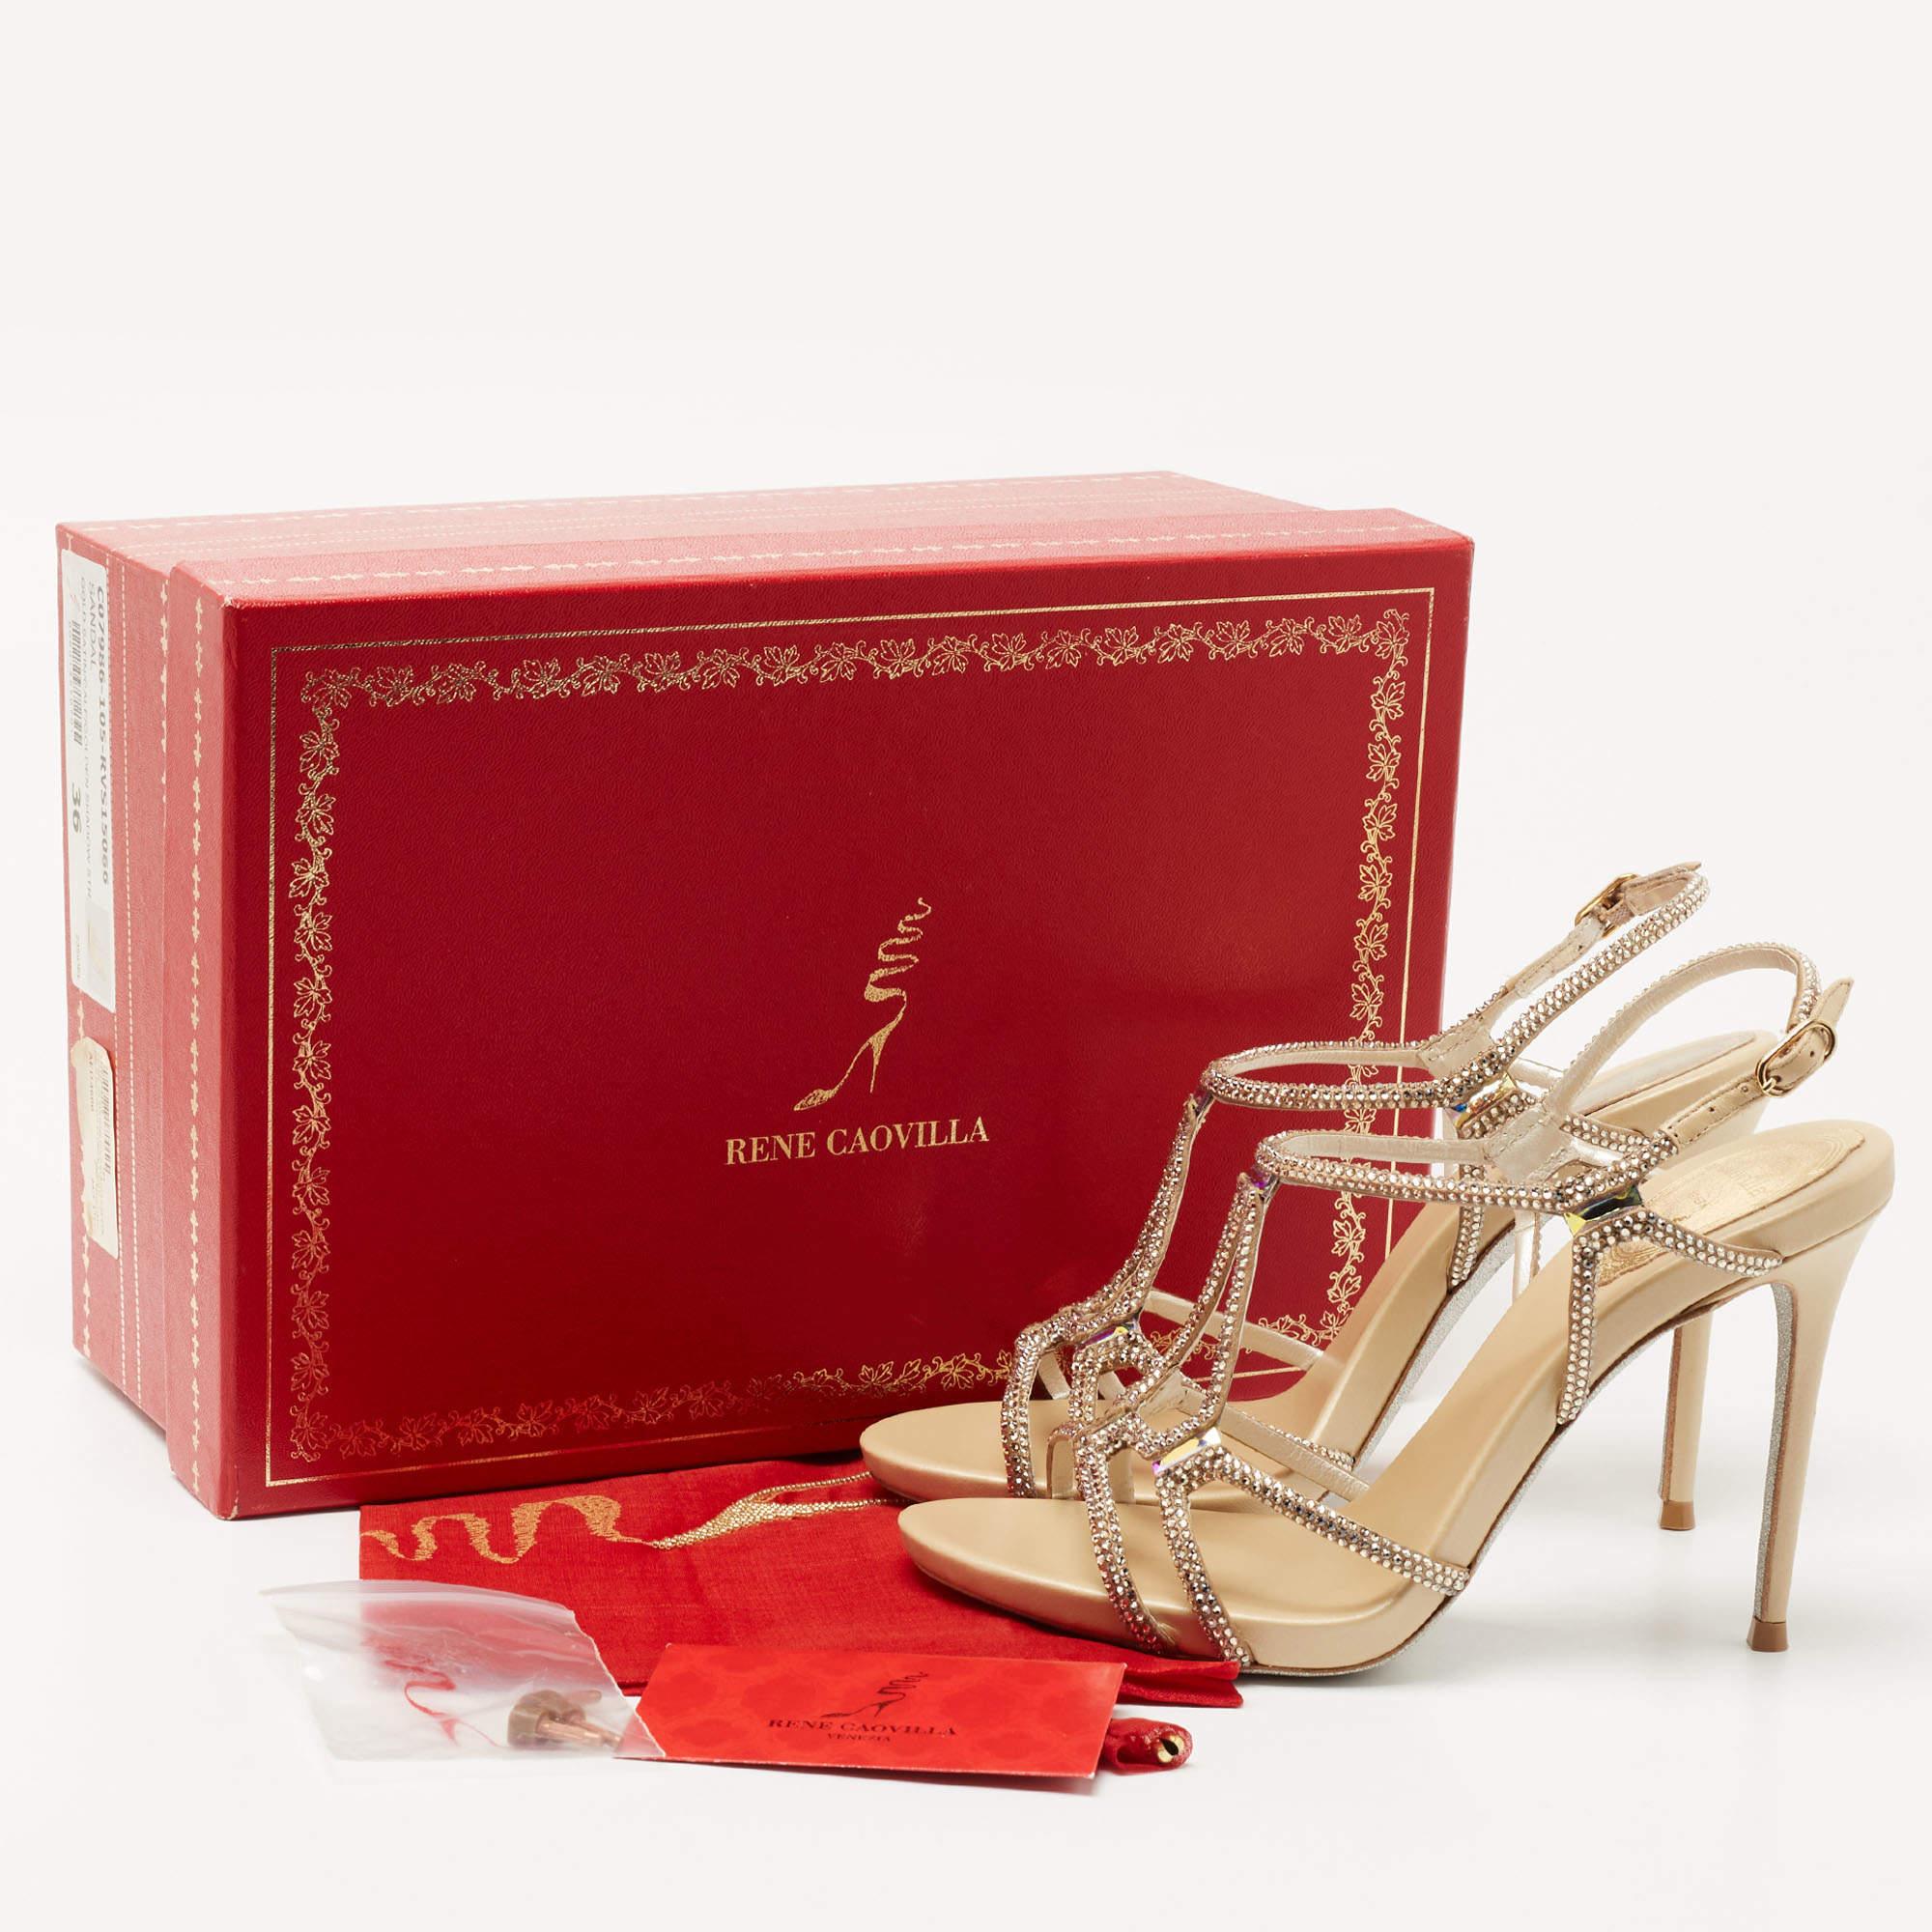 René Caovilla Leather and Crystal Venezia Crystal Slingback Sandals Size 36 5